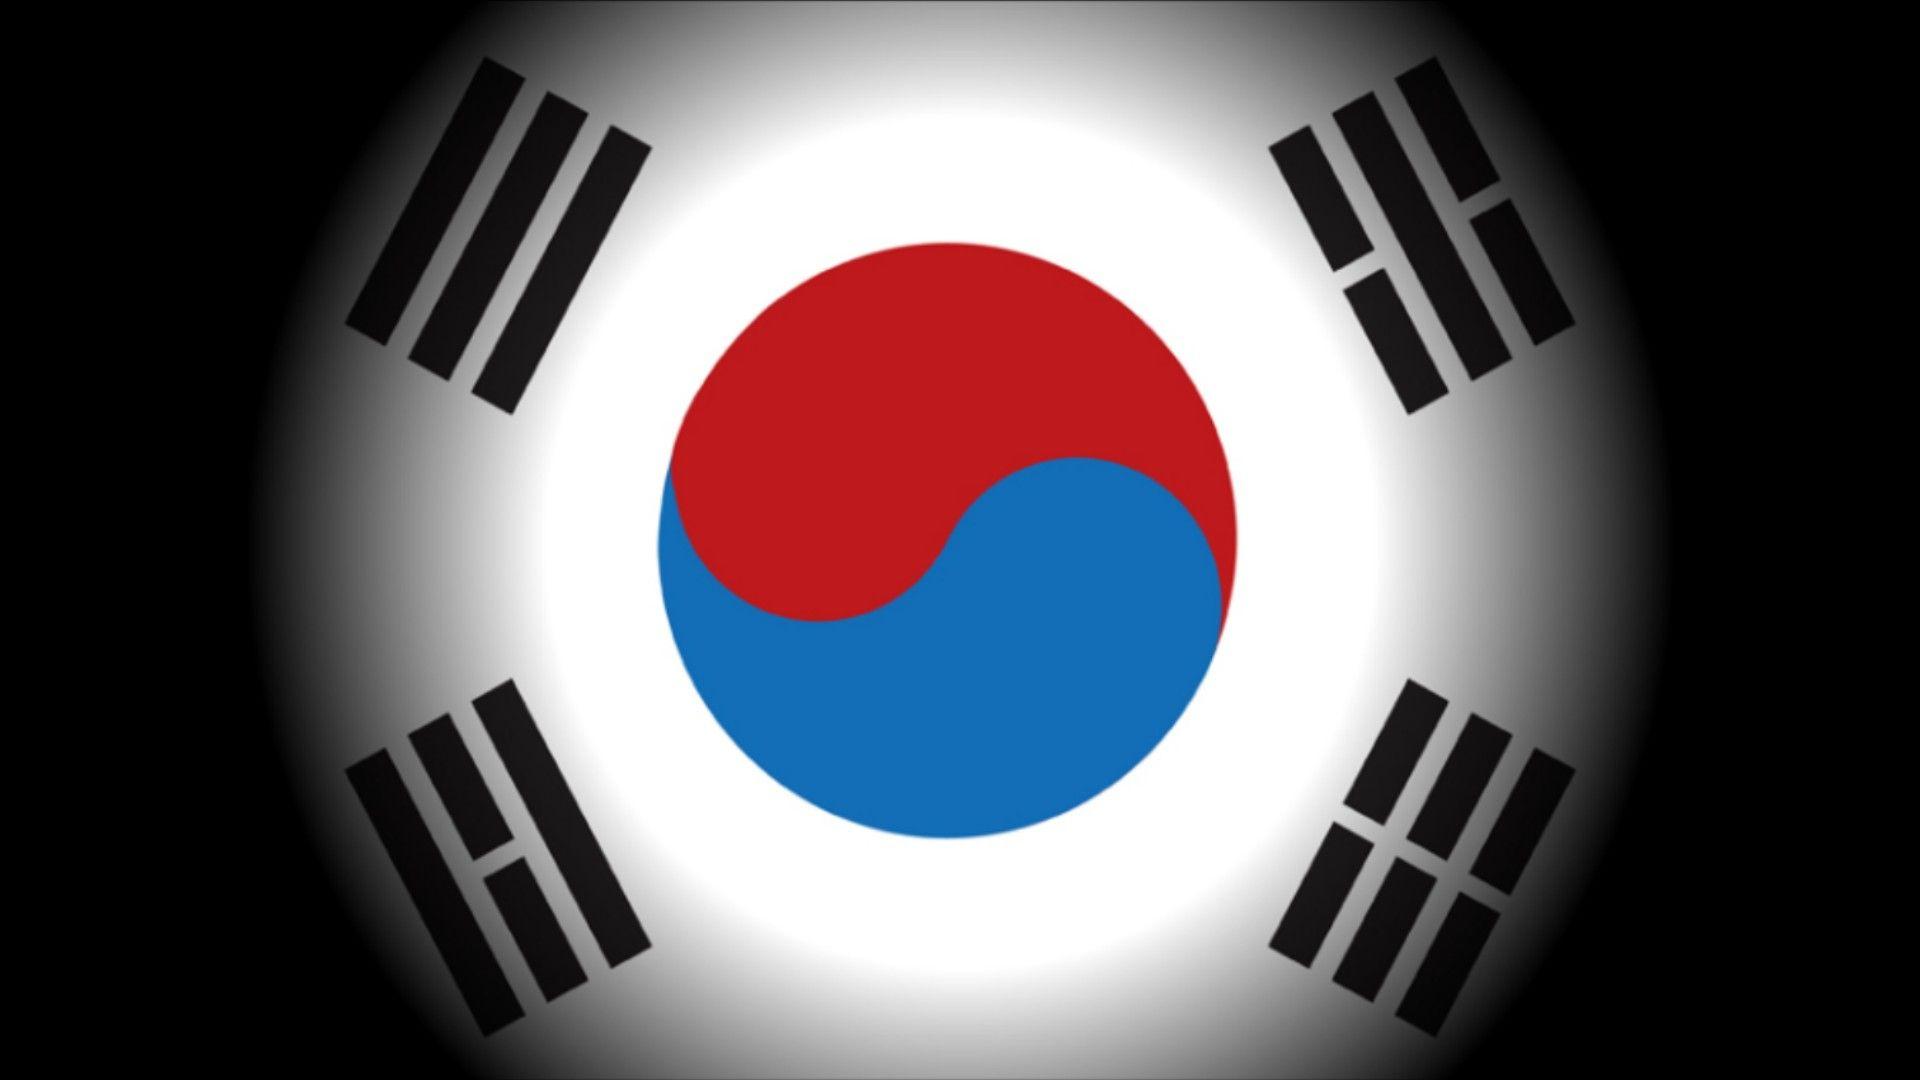 Cool Korean Flag Wallpaper - Insanity-Follows